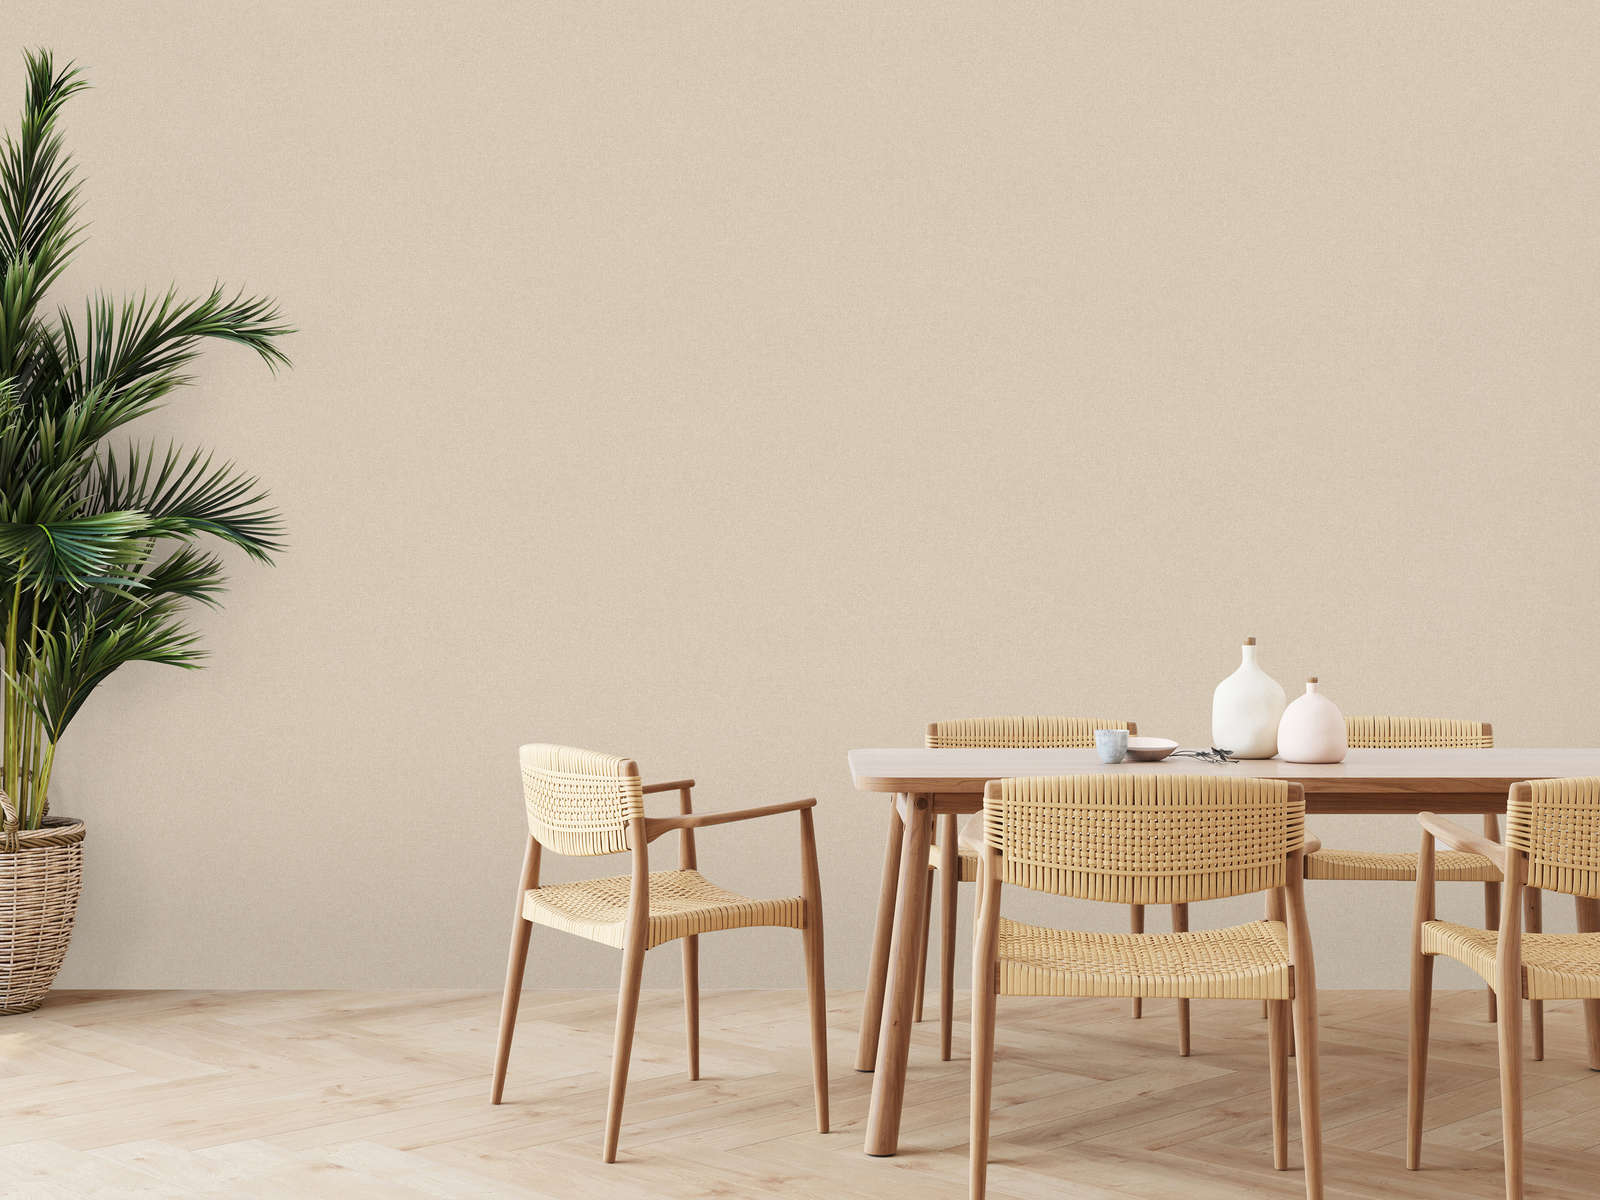             Non-woven wallpaper plains with fine structure - beige
        